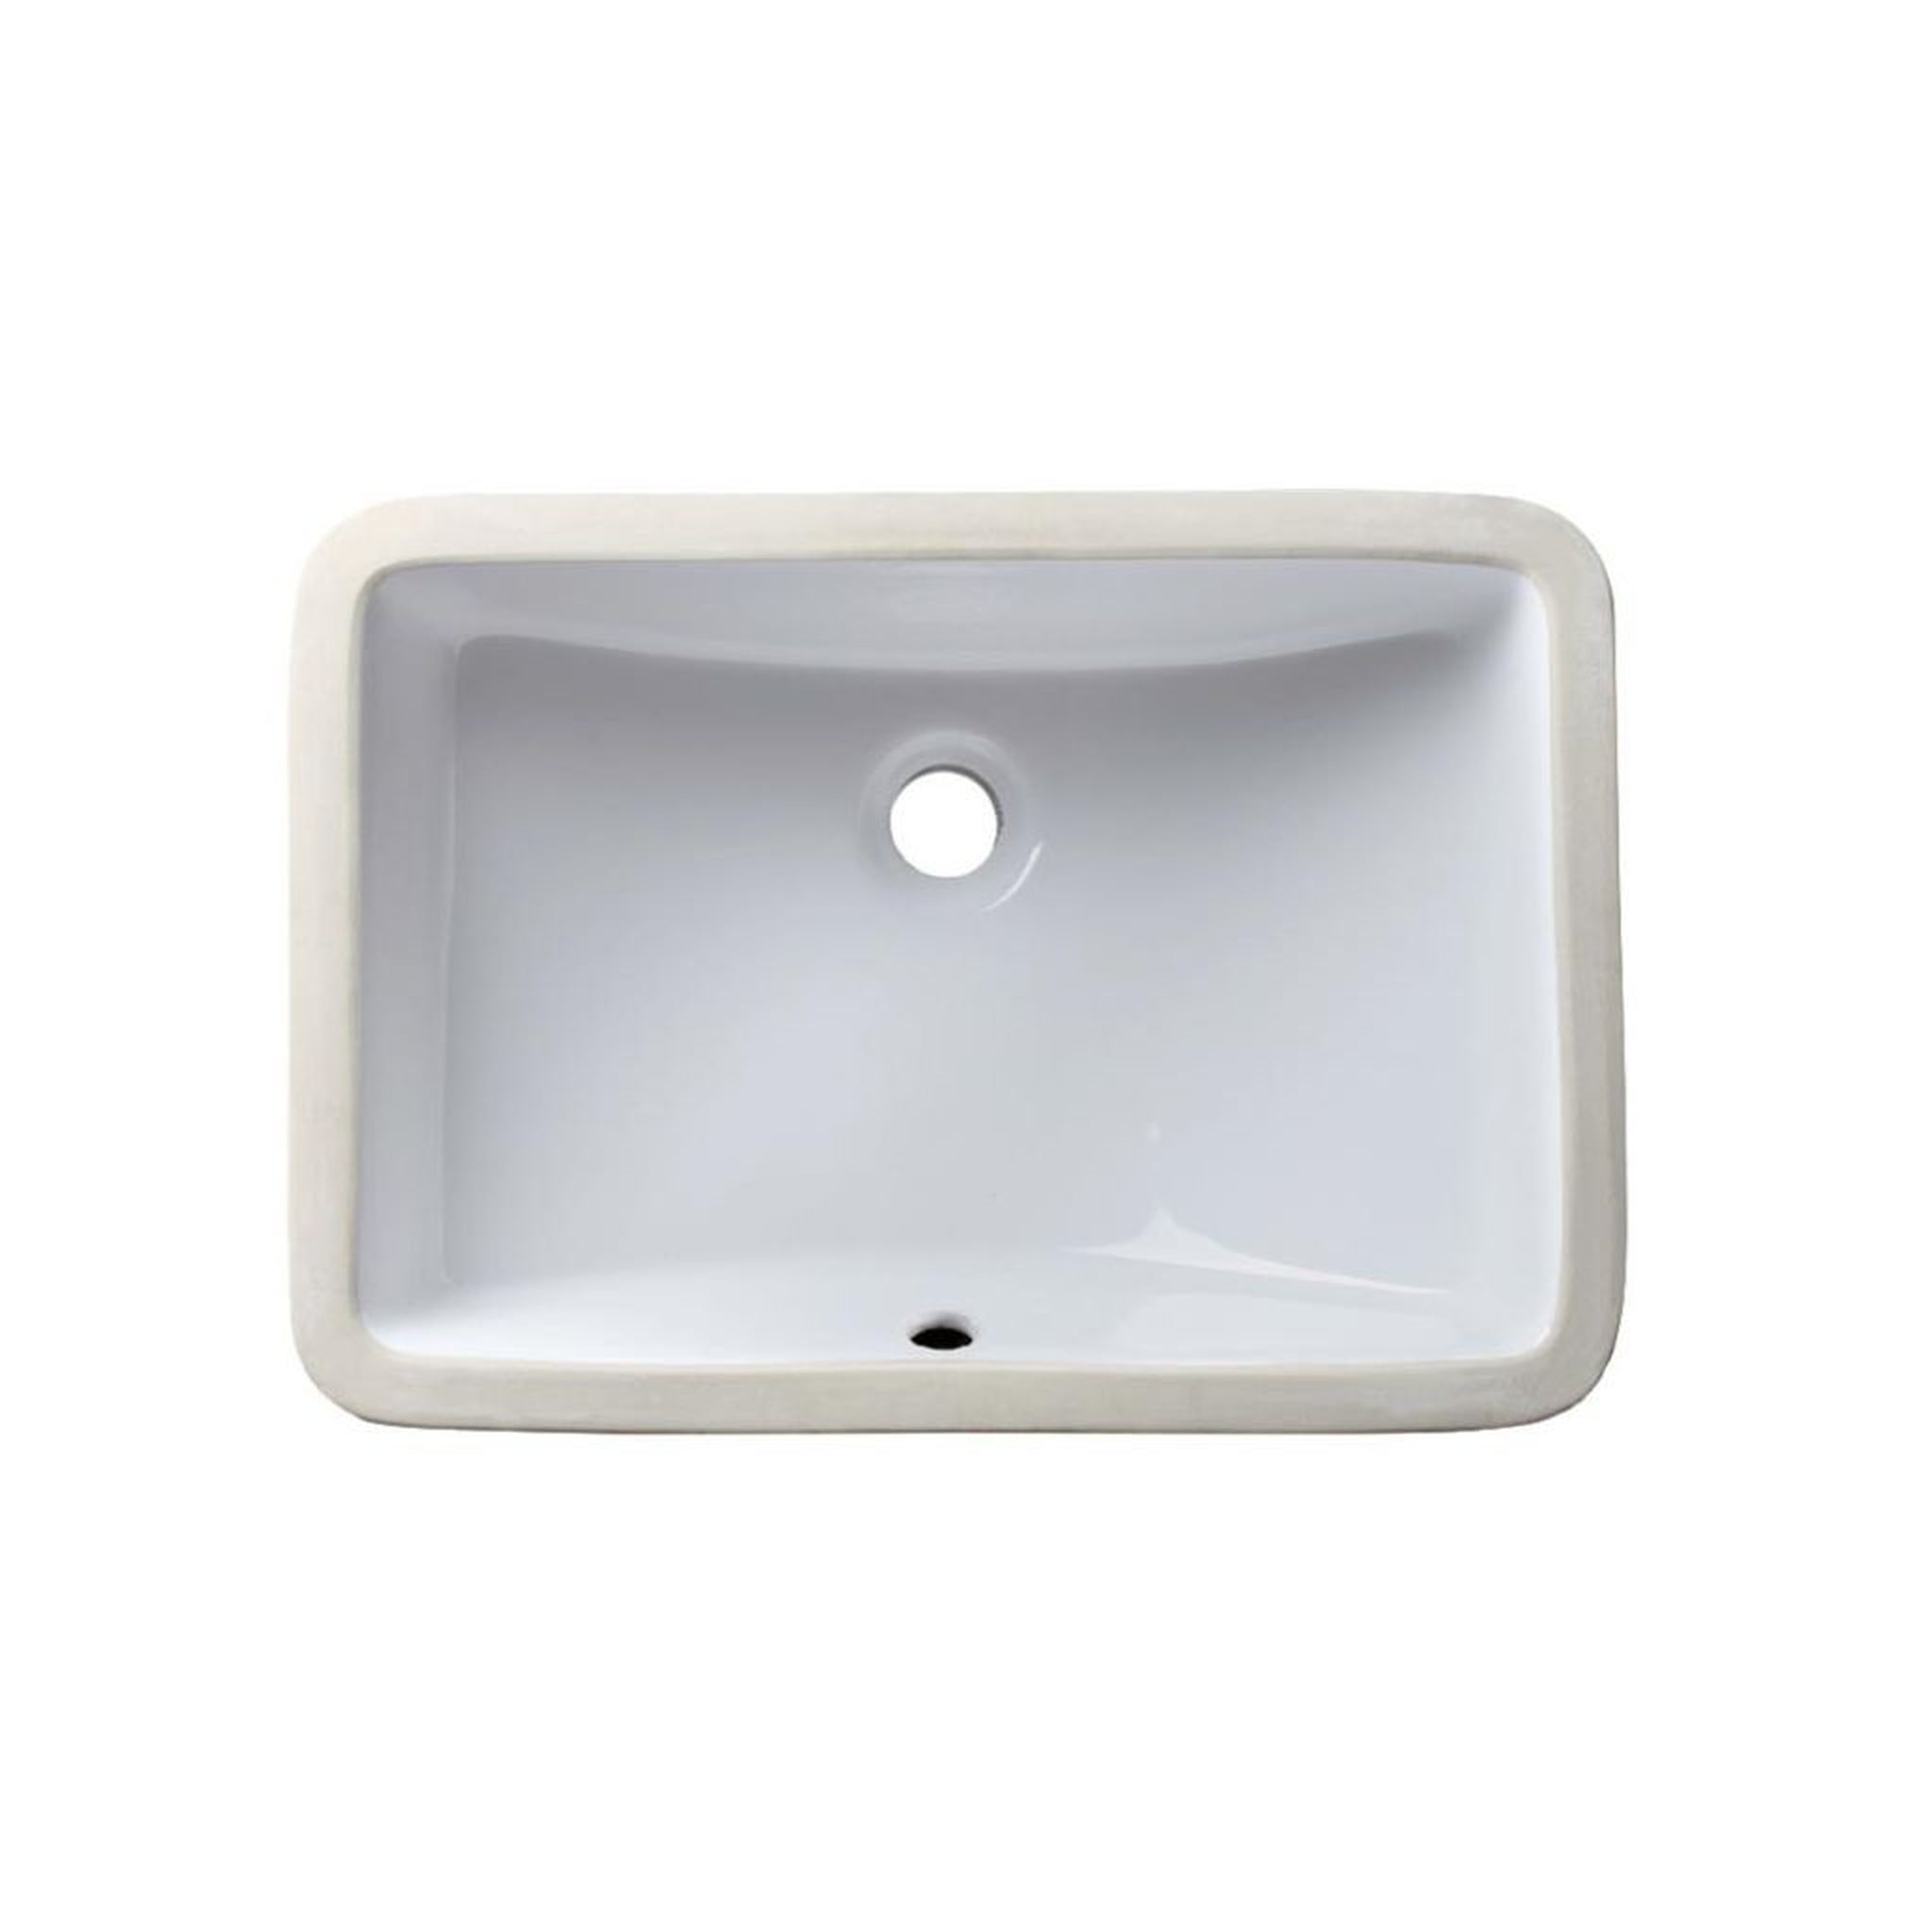 Allora USA, Allora USA 20.875" X 14.75" White Vitreous China Rectangular Porcelain Undermount Sink With Overflow